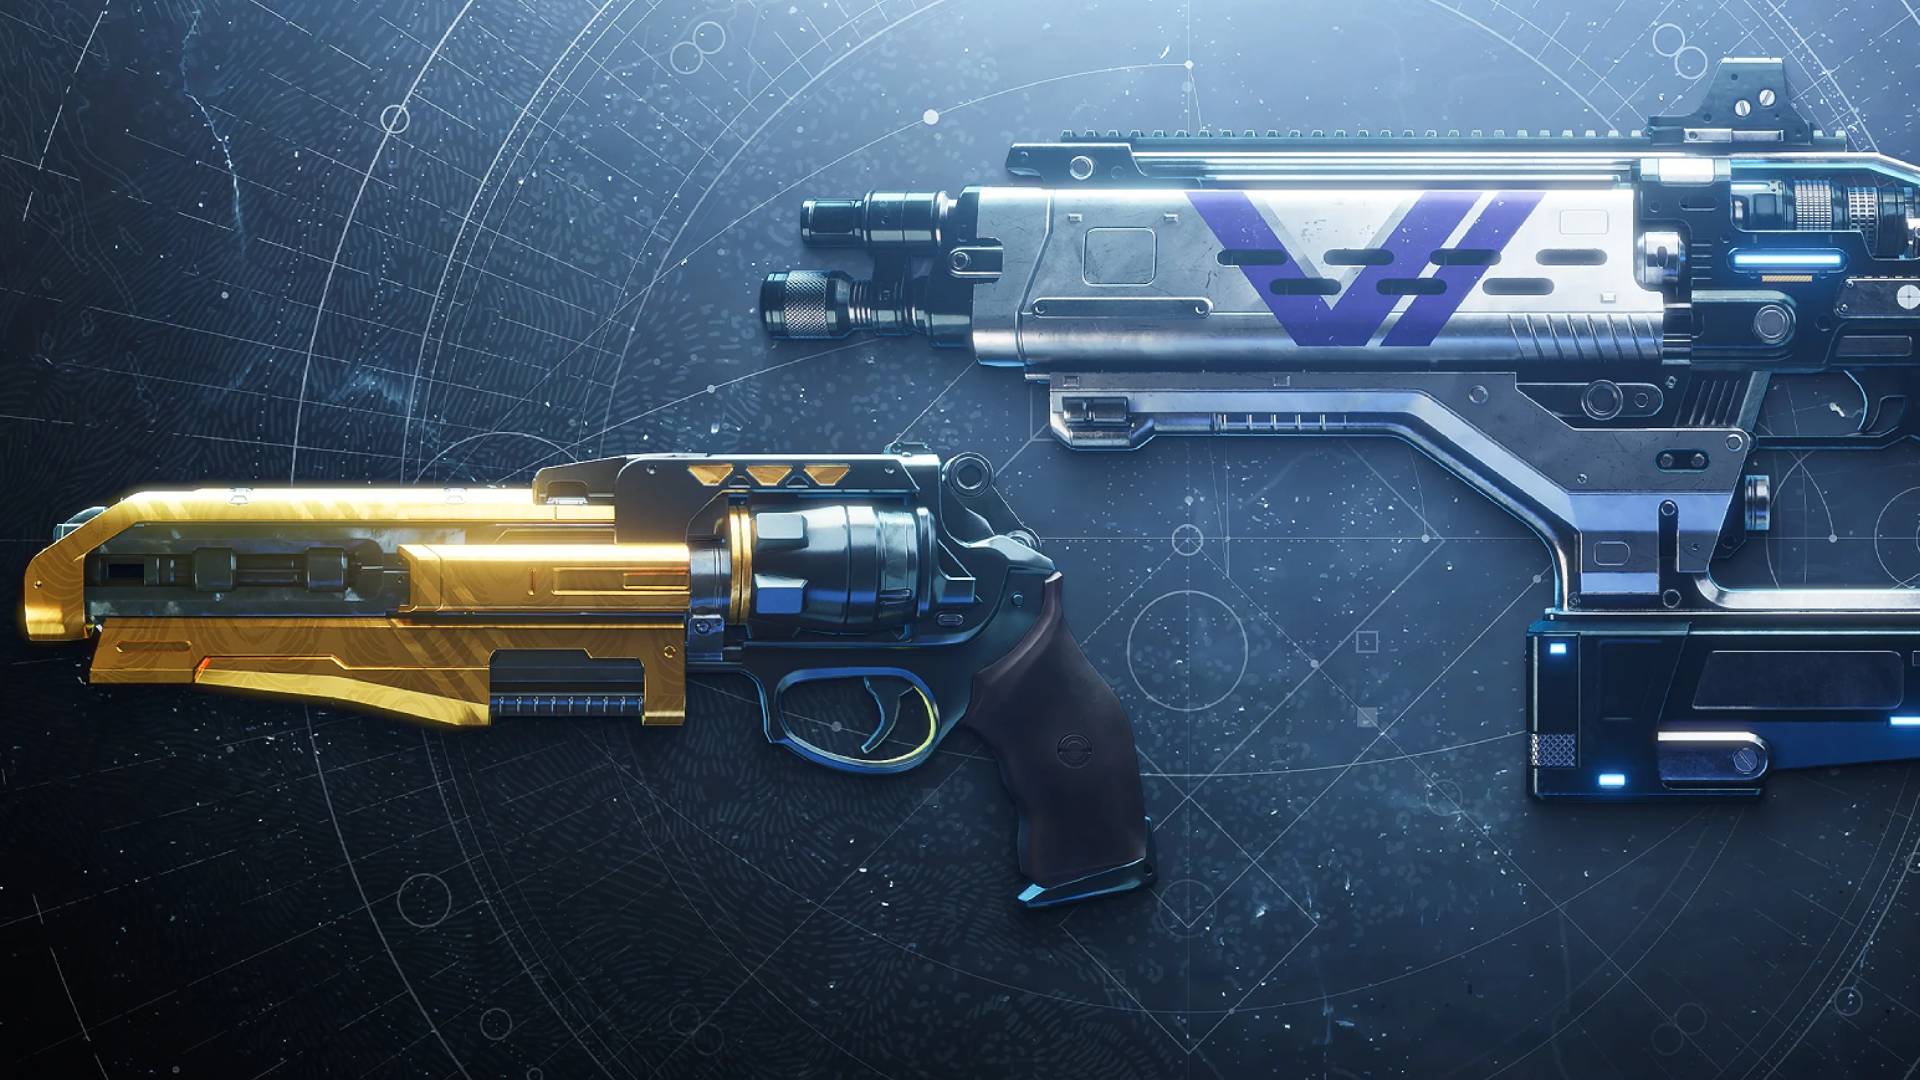 Destiny 2 skillful weapons at nightfall